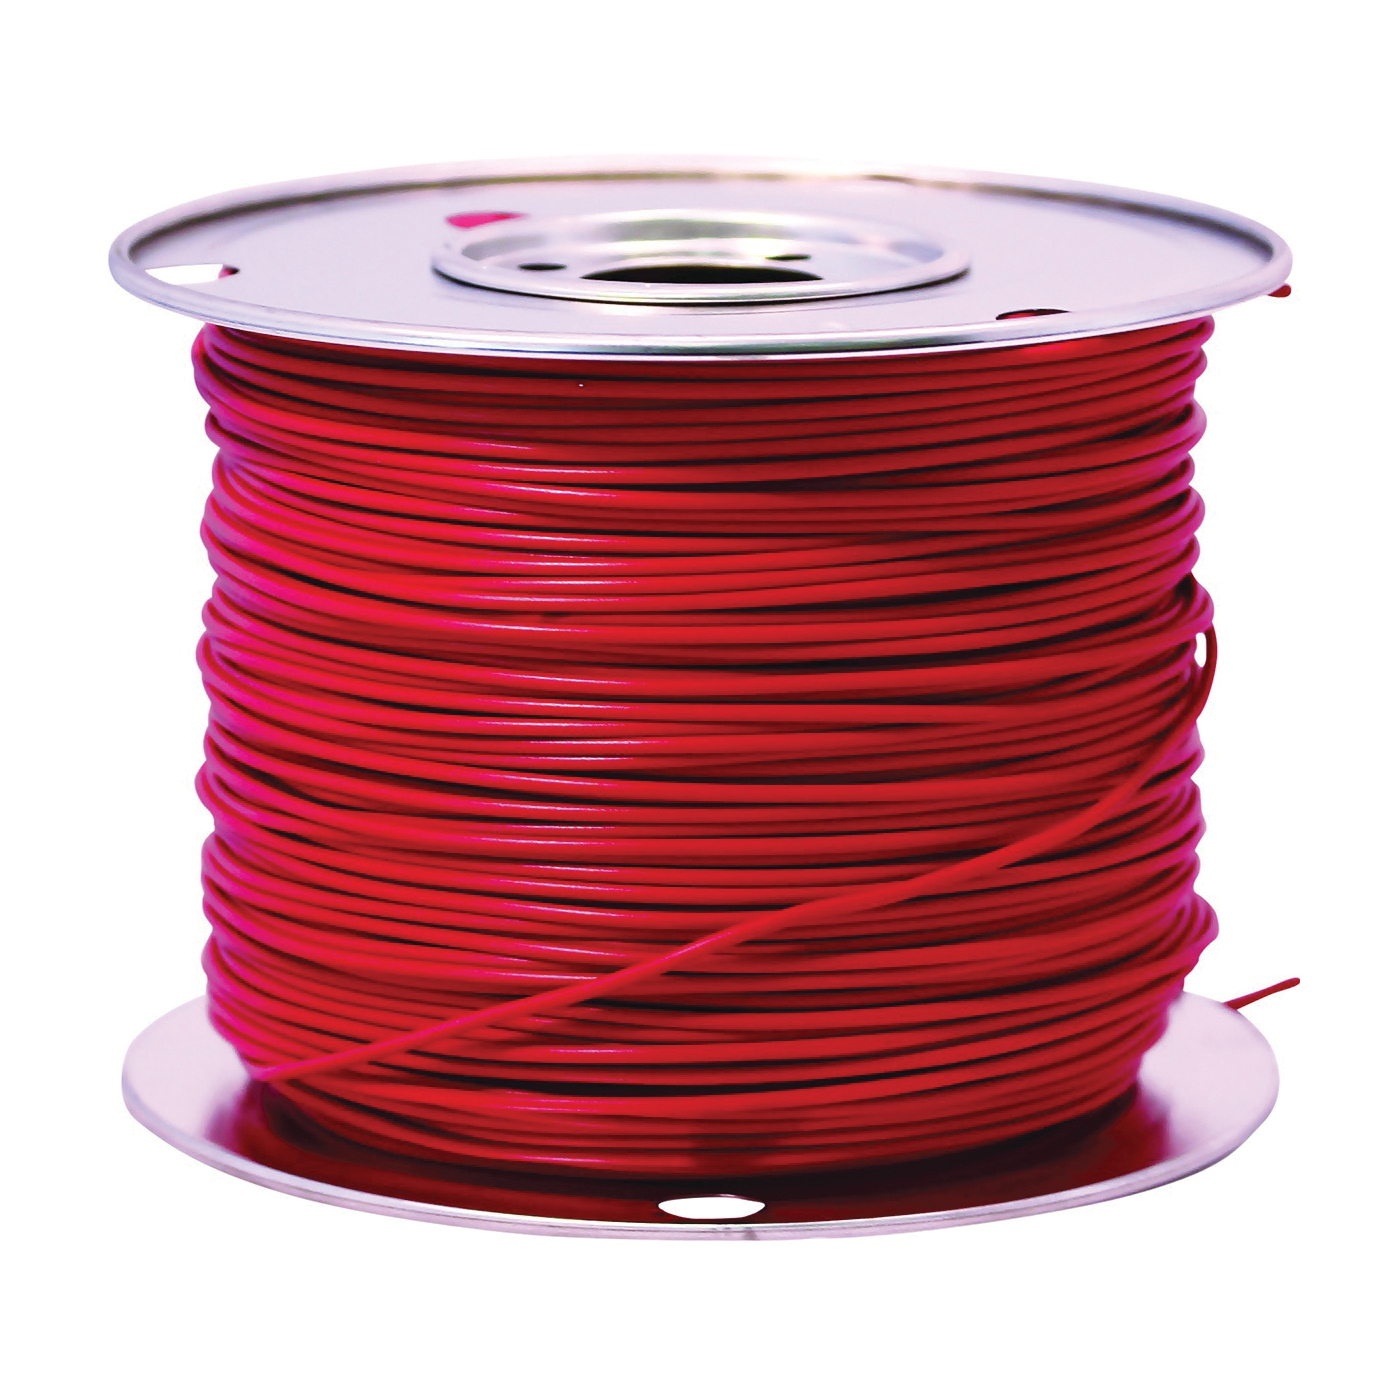 CCI 55667423 Primary Wire, 18 AWG Wire, 1-Conductor, 60 VDC, Copper Conductor, Red Sheath - 1